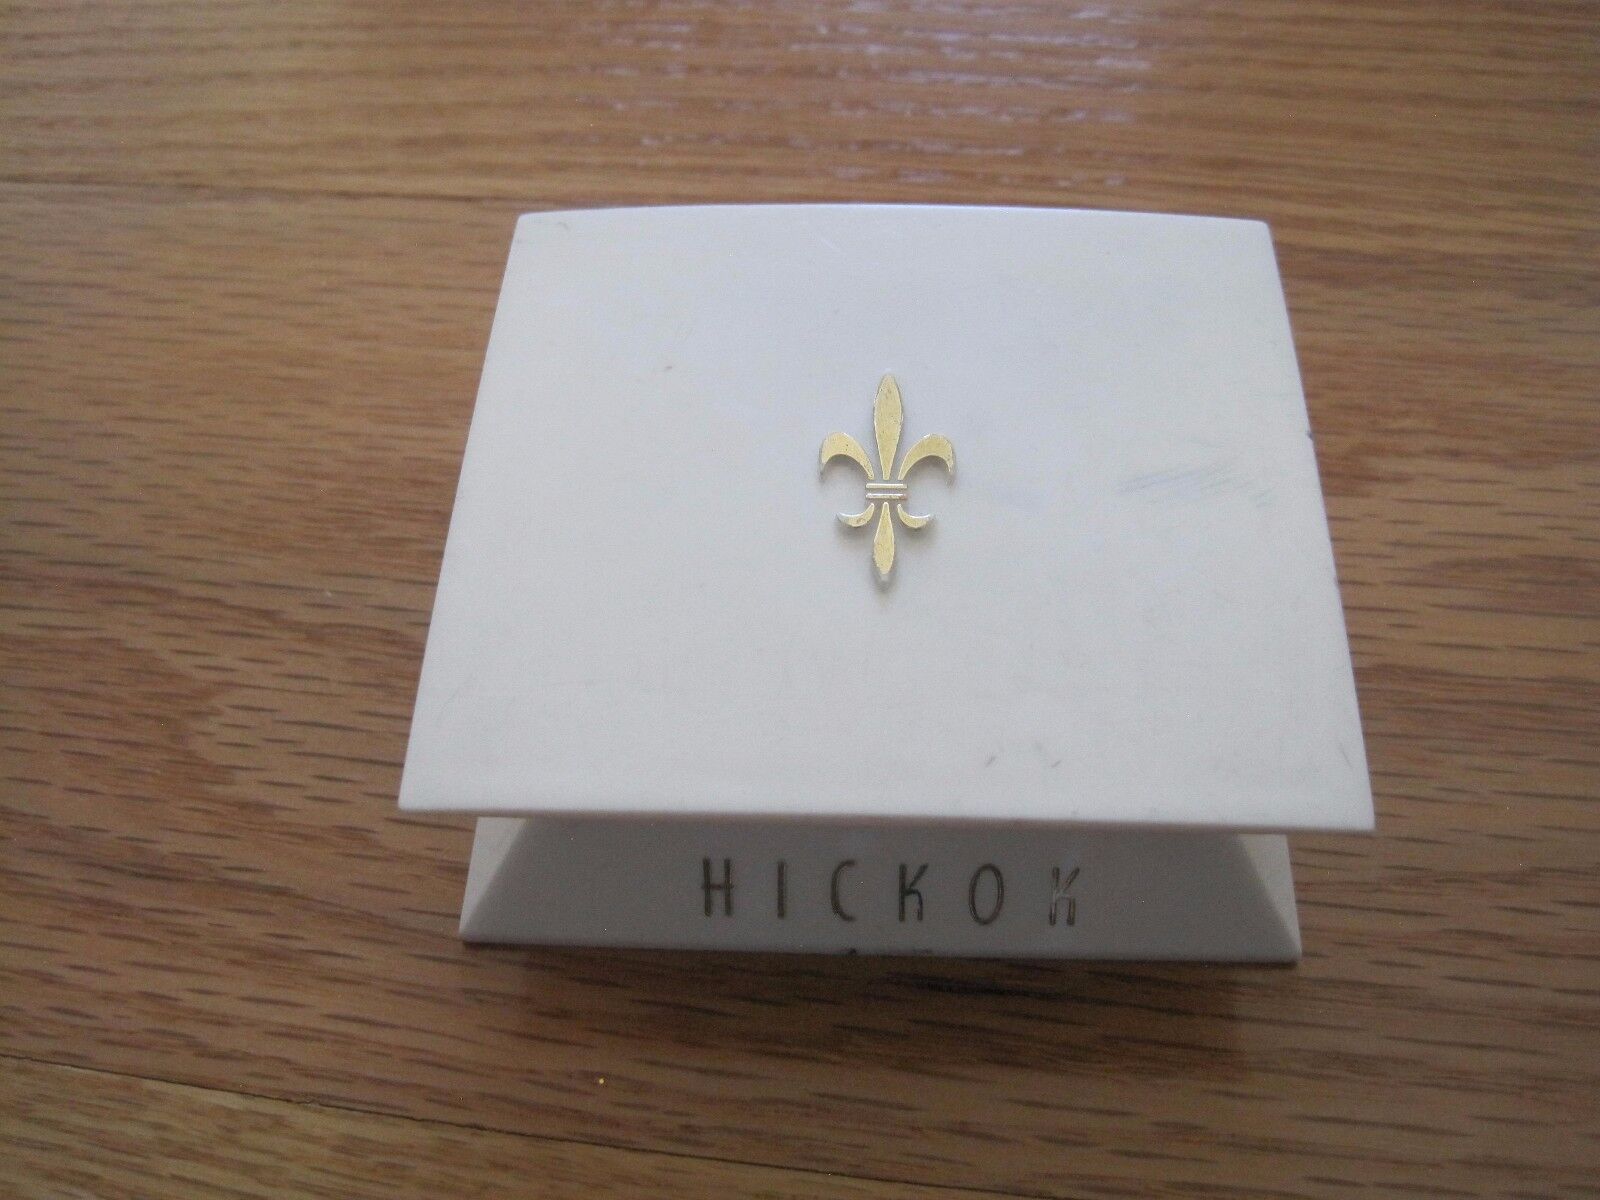  Hickok Ring Box White Vintage 